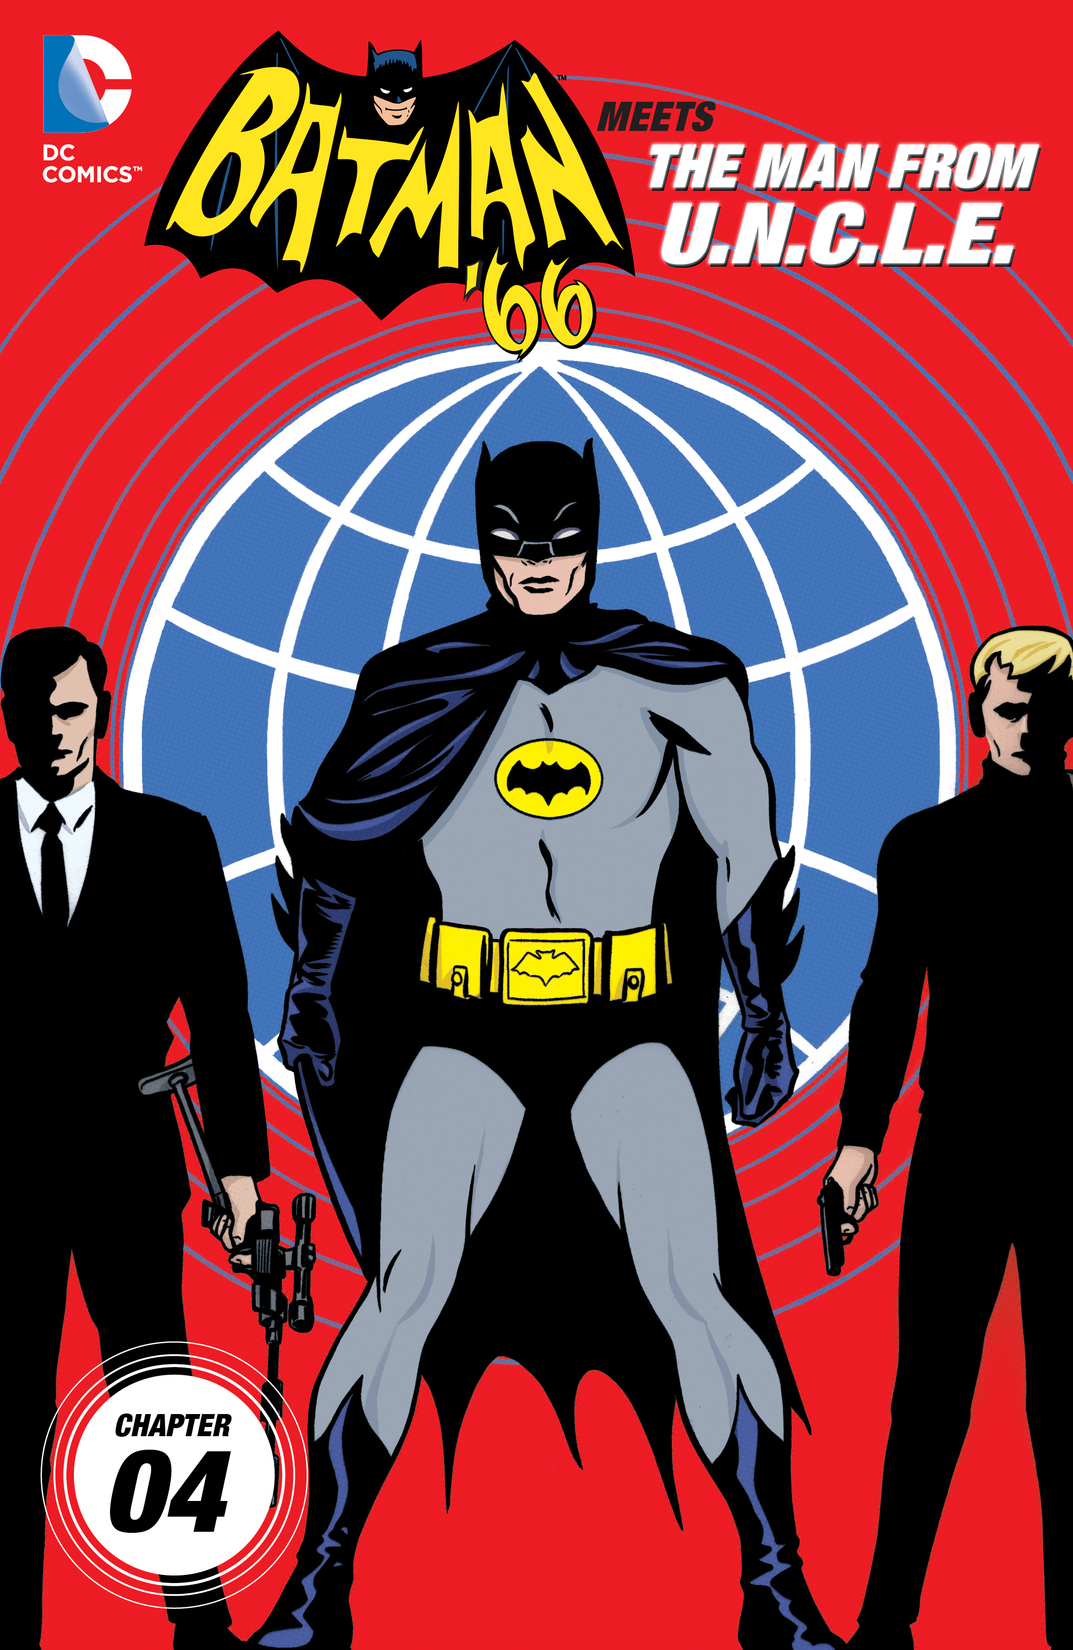 Batman '66 Meets The Man From U.N.C.L.E. #4 preview images